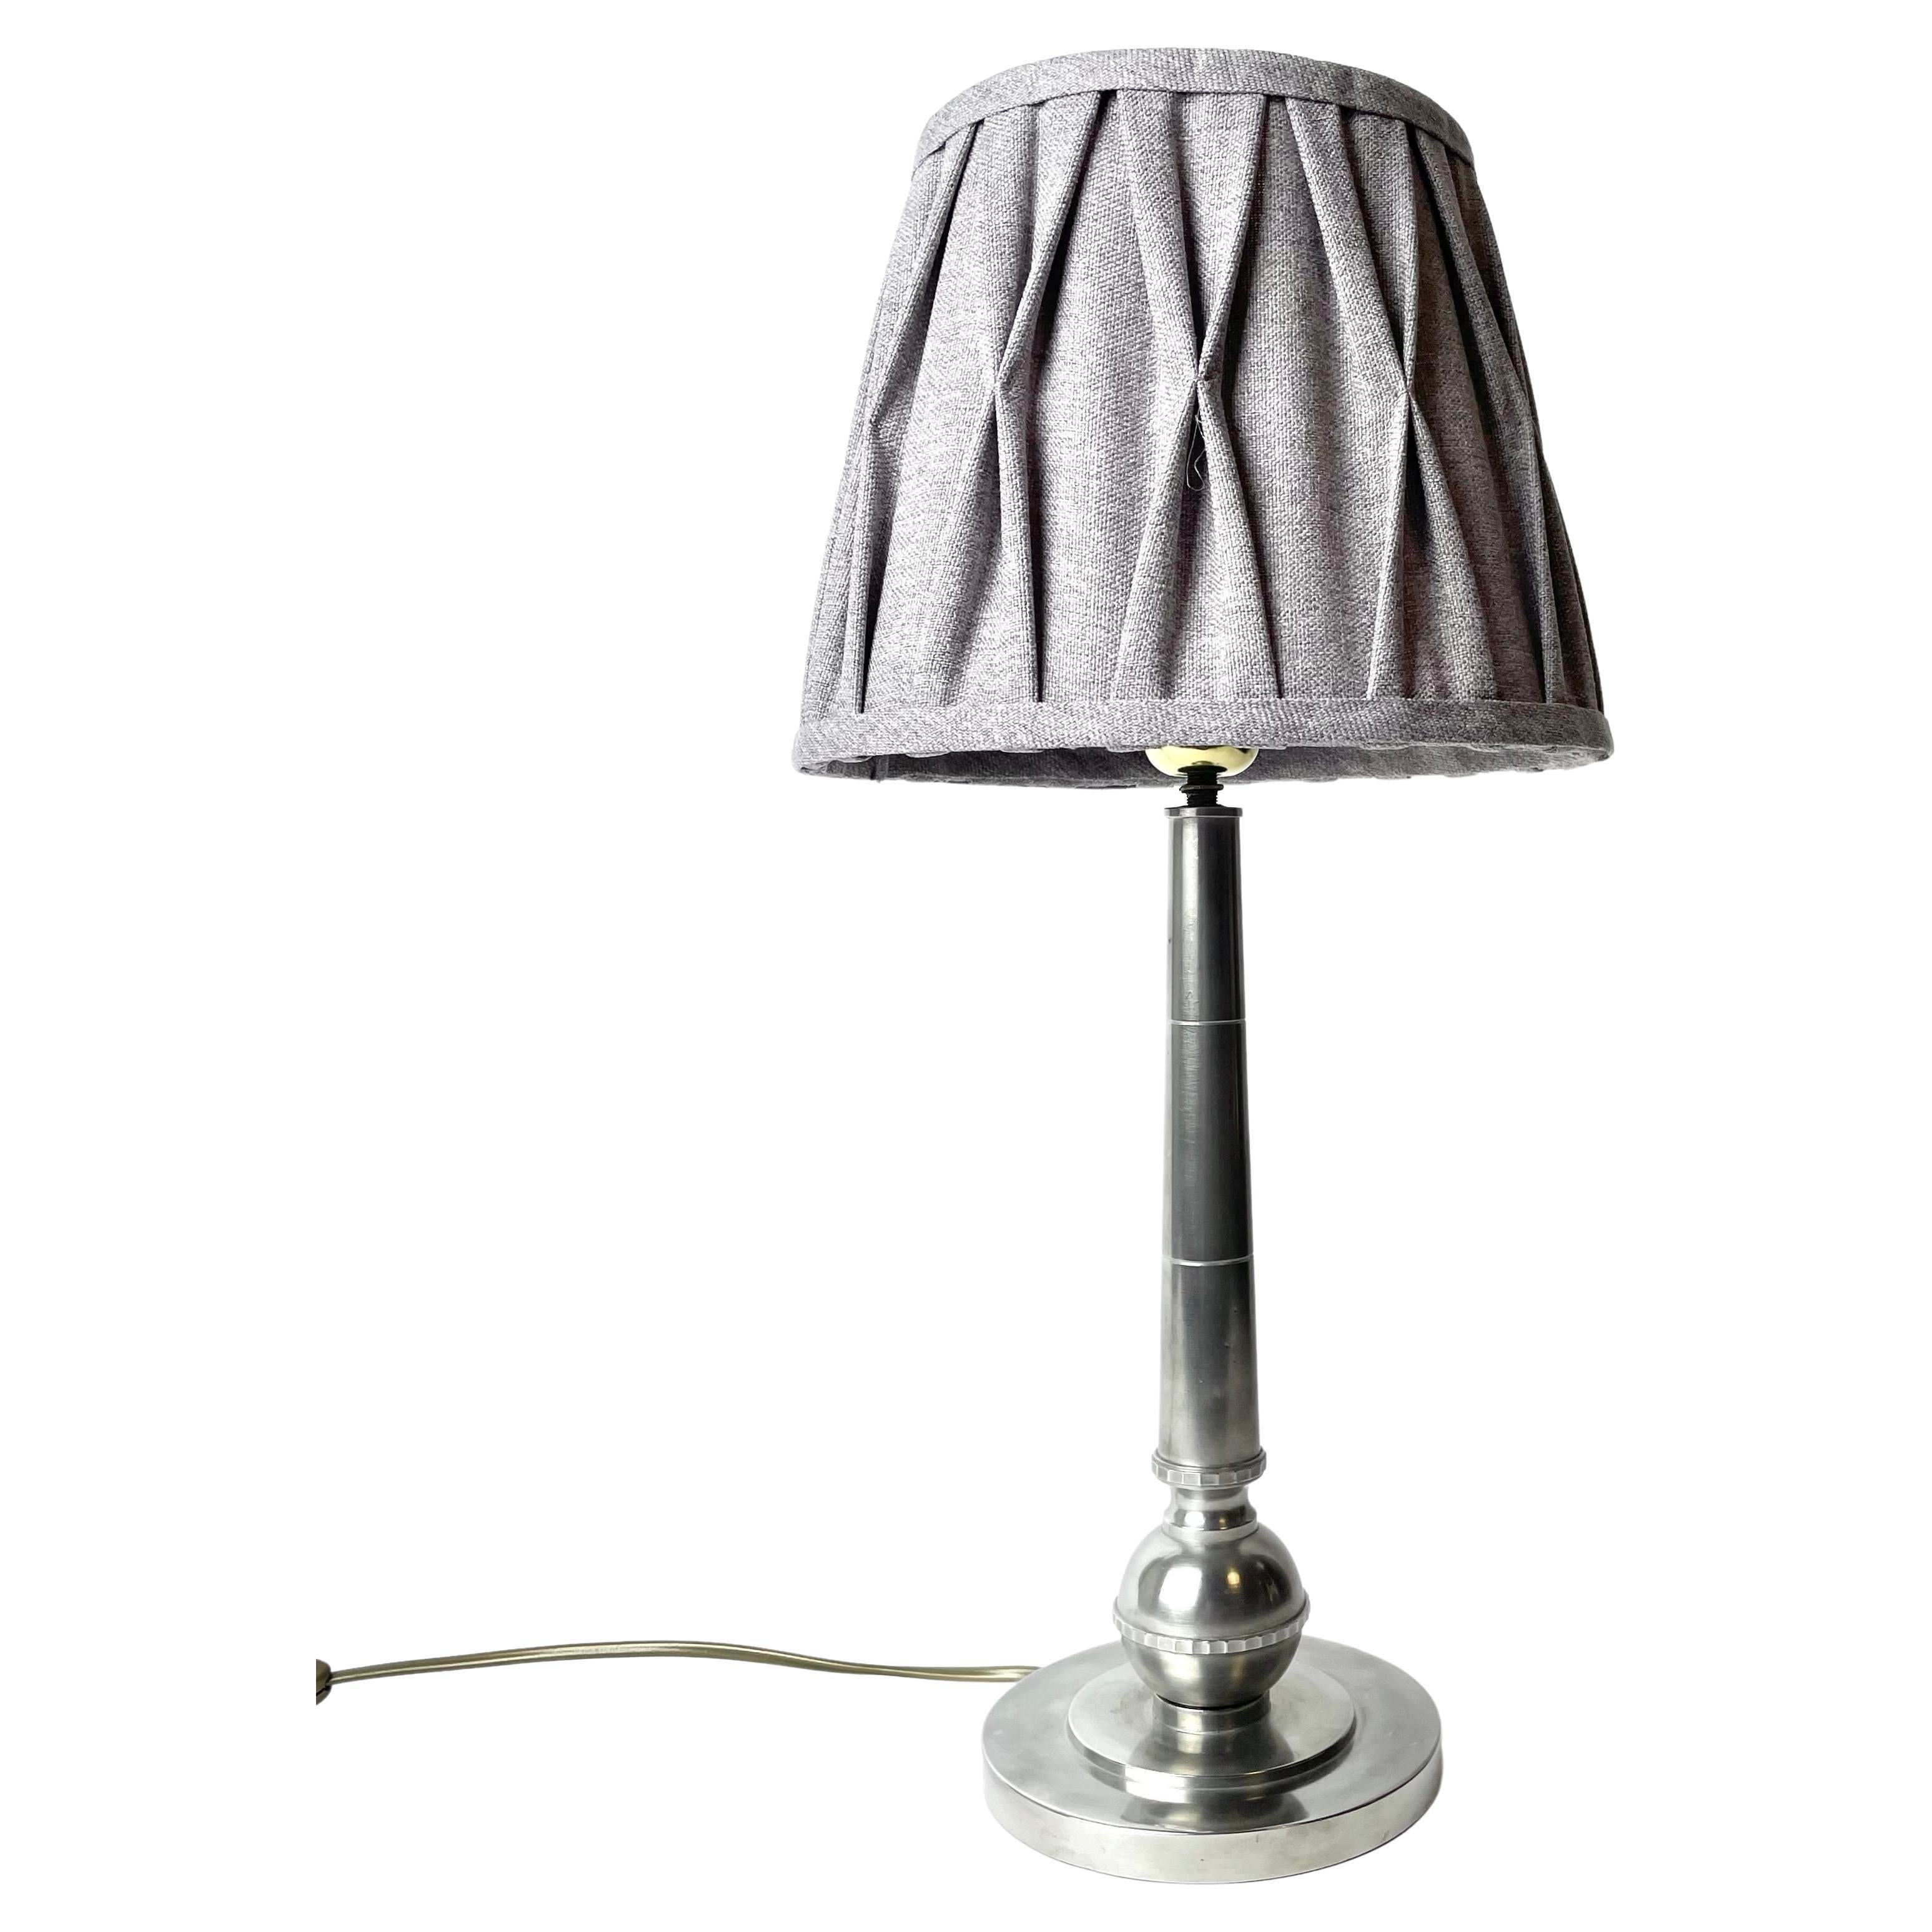 Elegant Pewter Lamp in Art Deco, C.G Hallberg Stockholm, Year 1930 For Sale